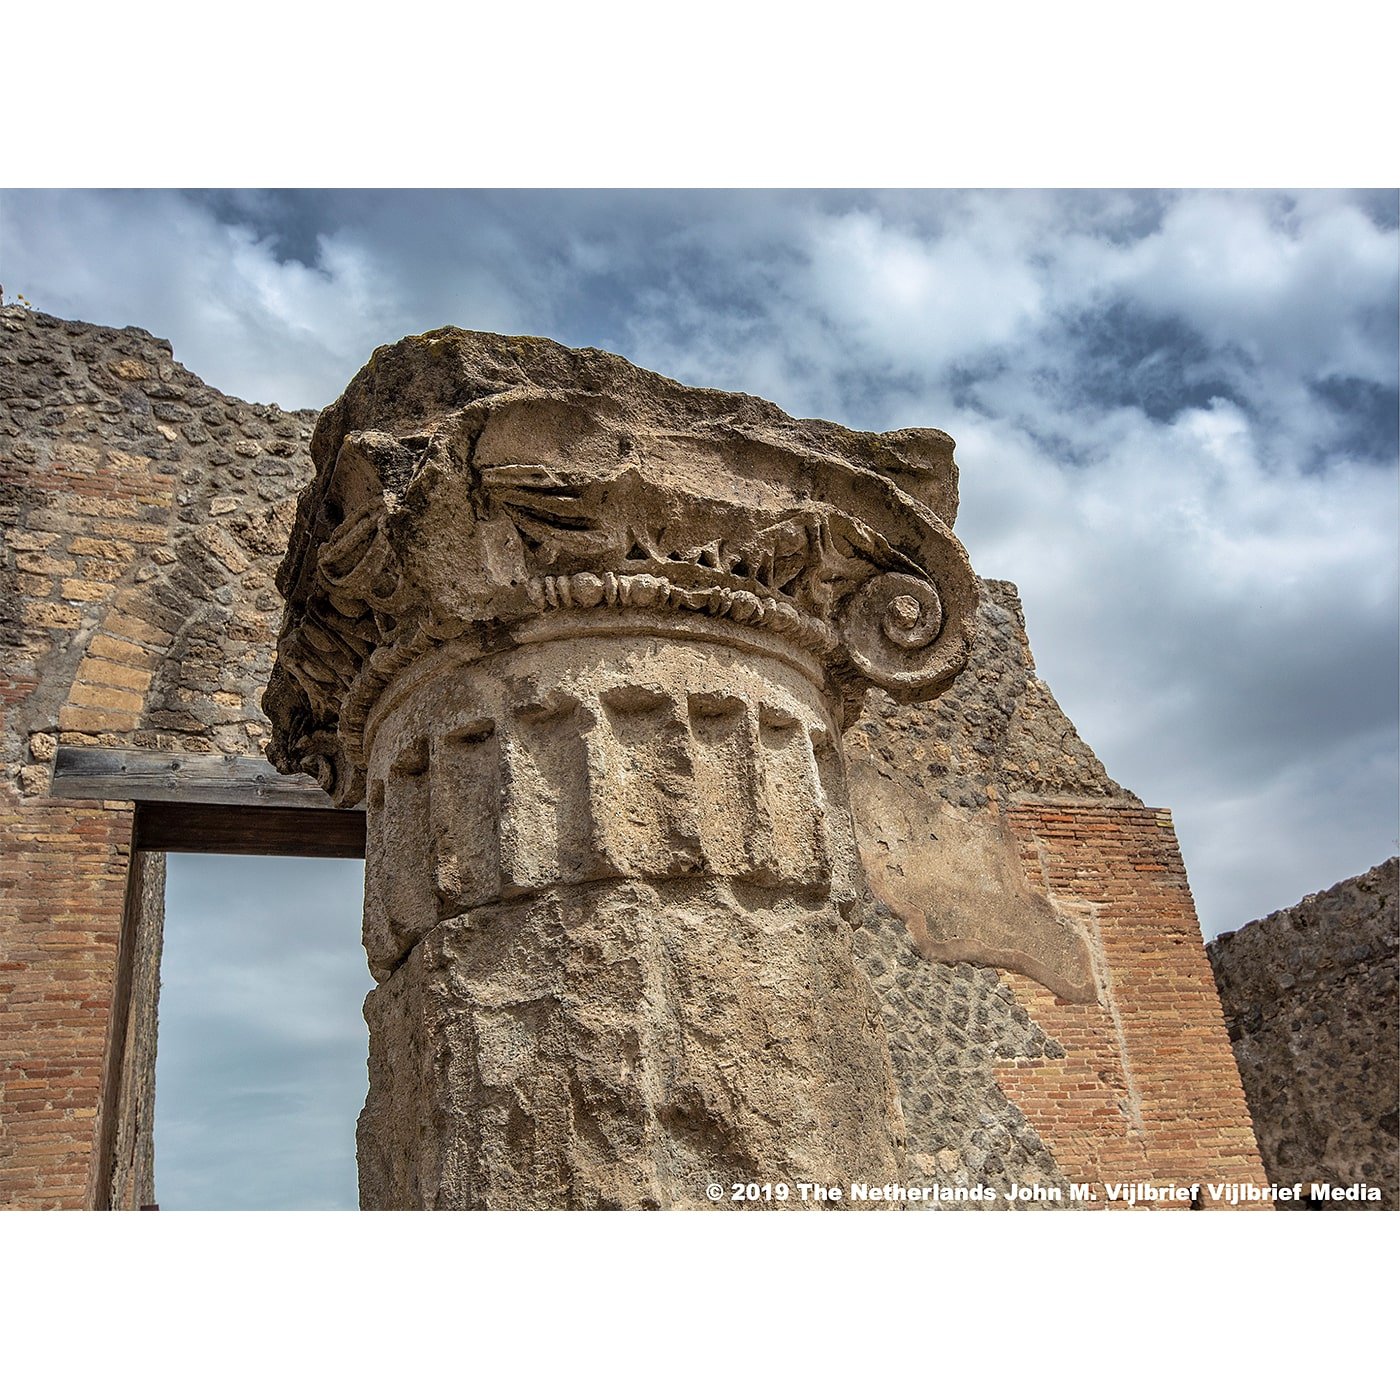 Pompei5_JohnVijlbrief-min.jpg